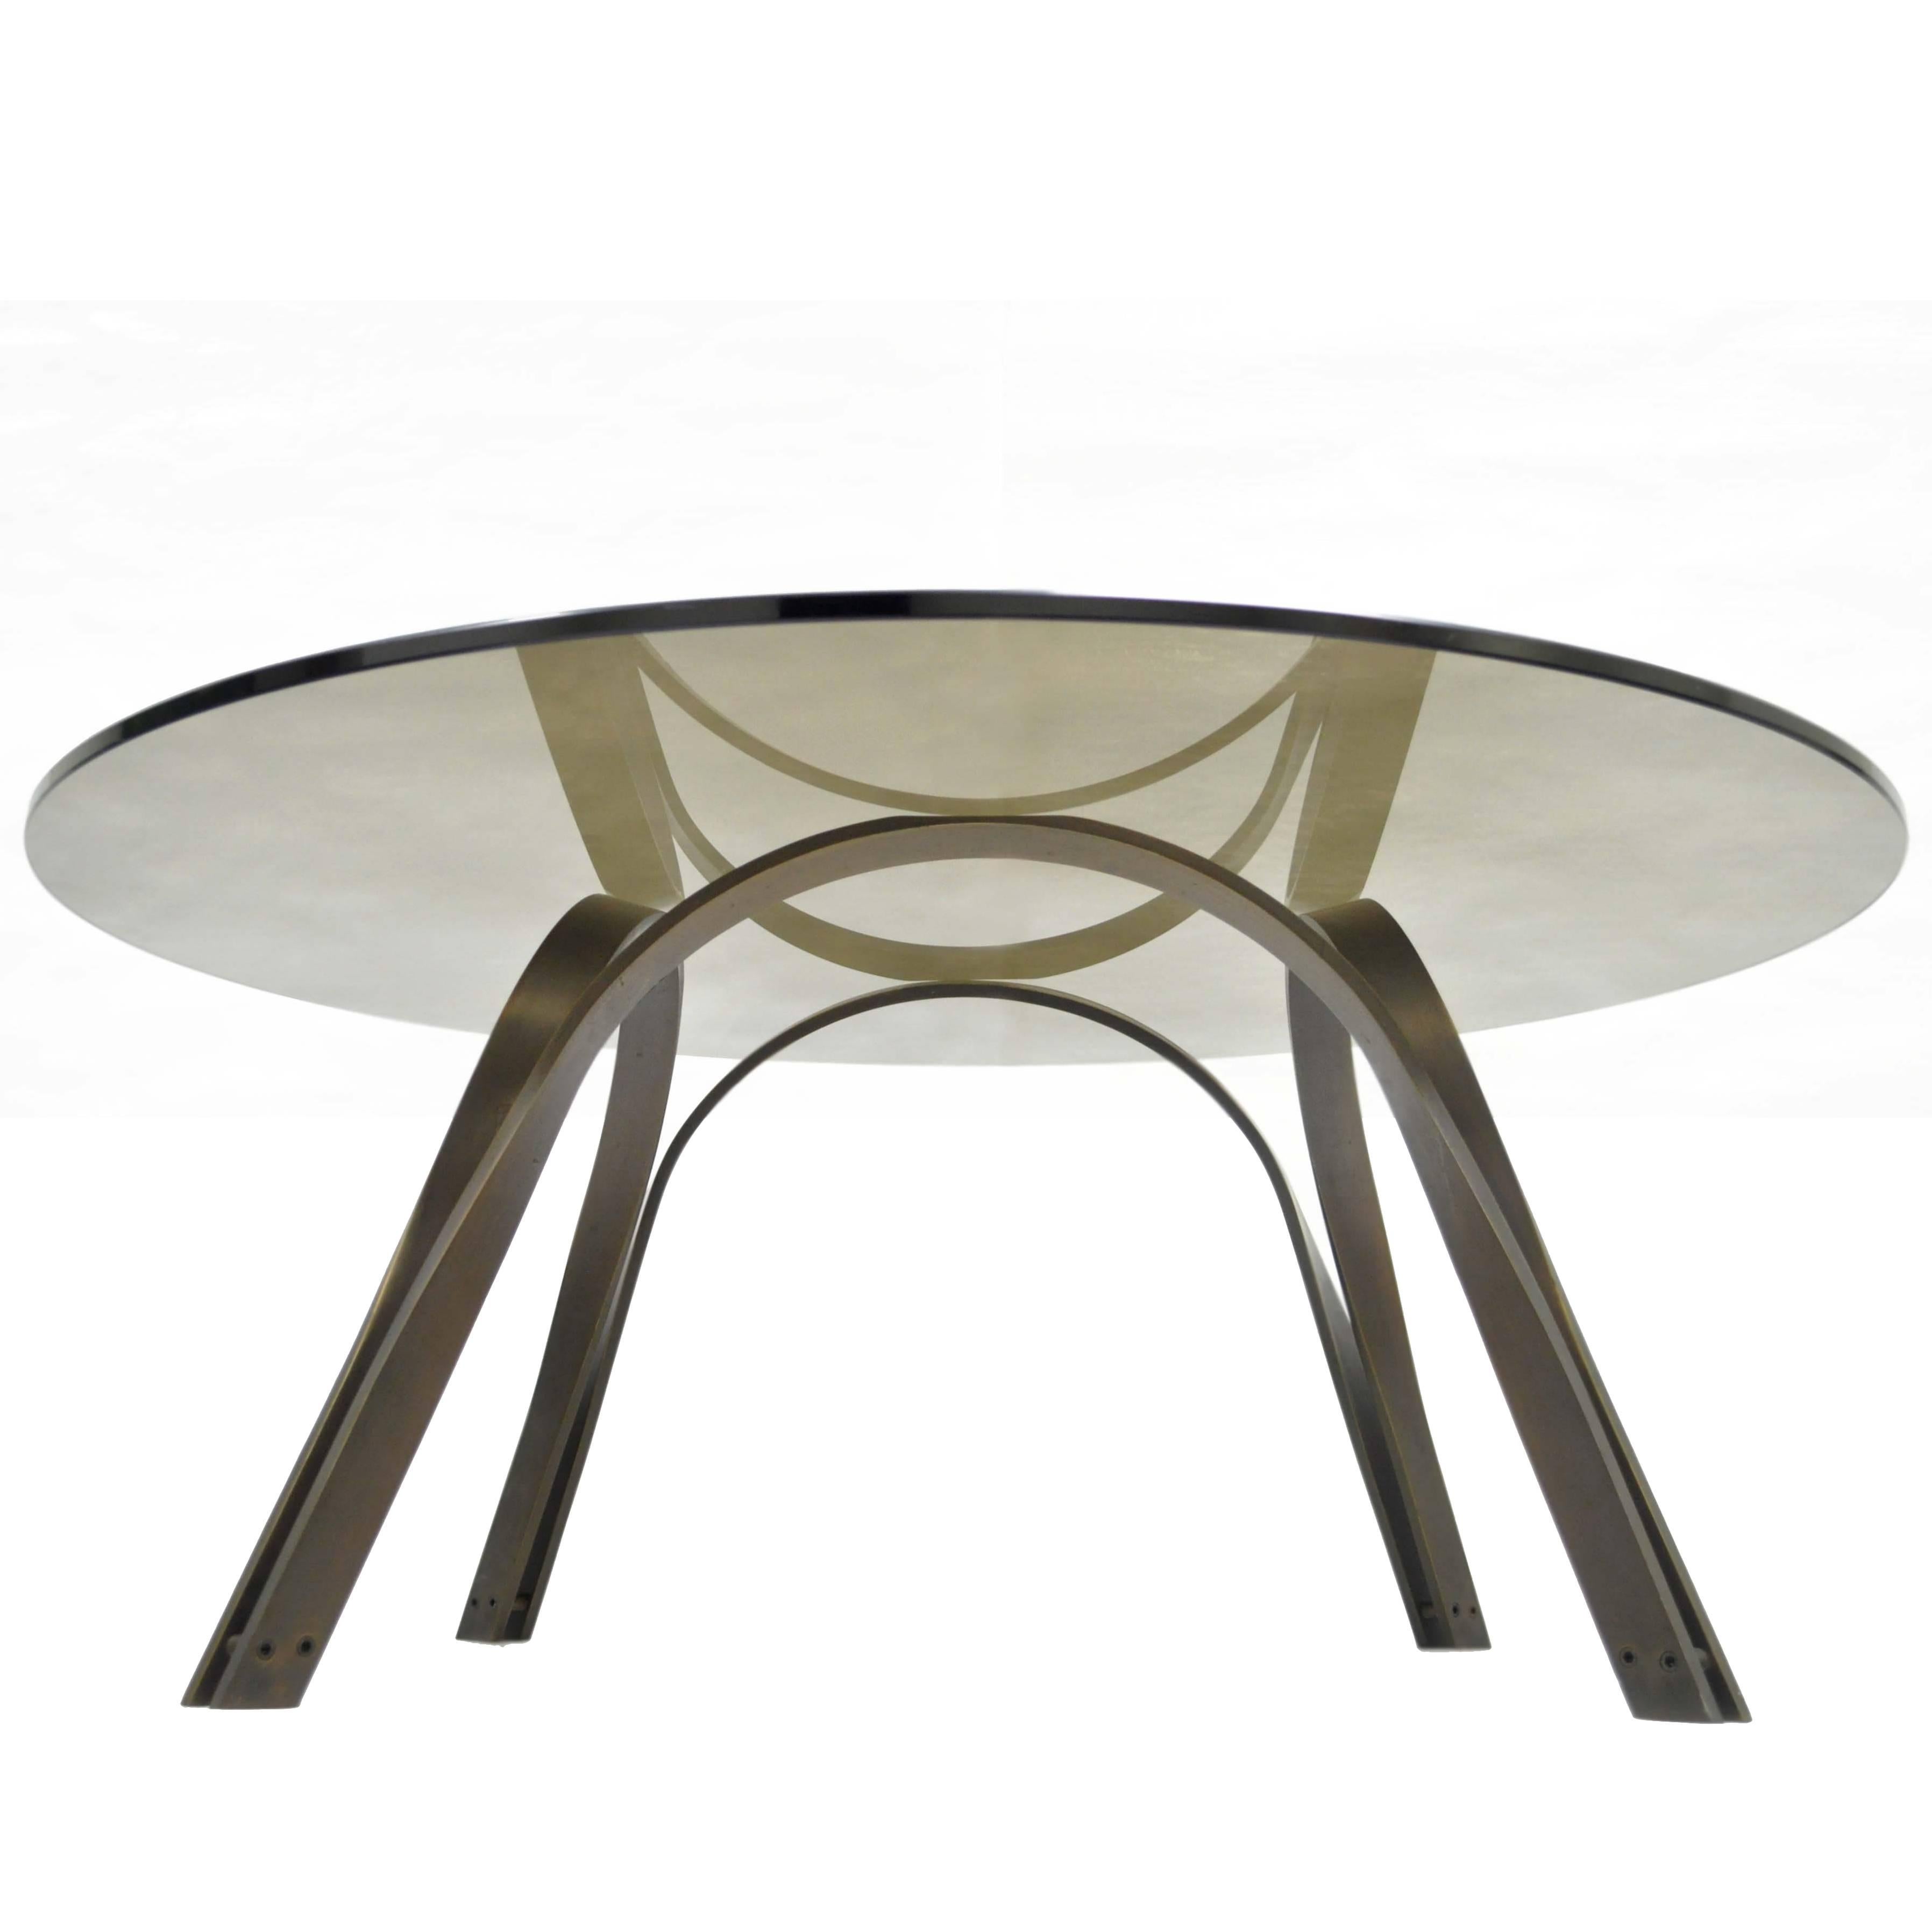 Trimark Bronze Sculptural Round Glass Coffee Table After Roger Sprunger Dunbar For Sale